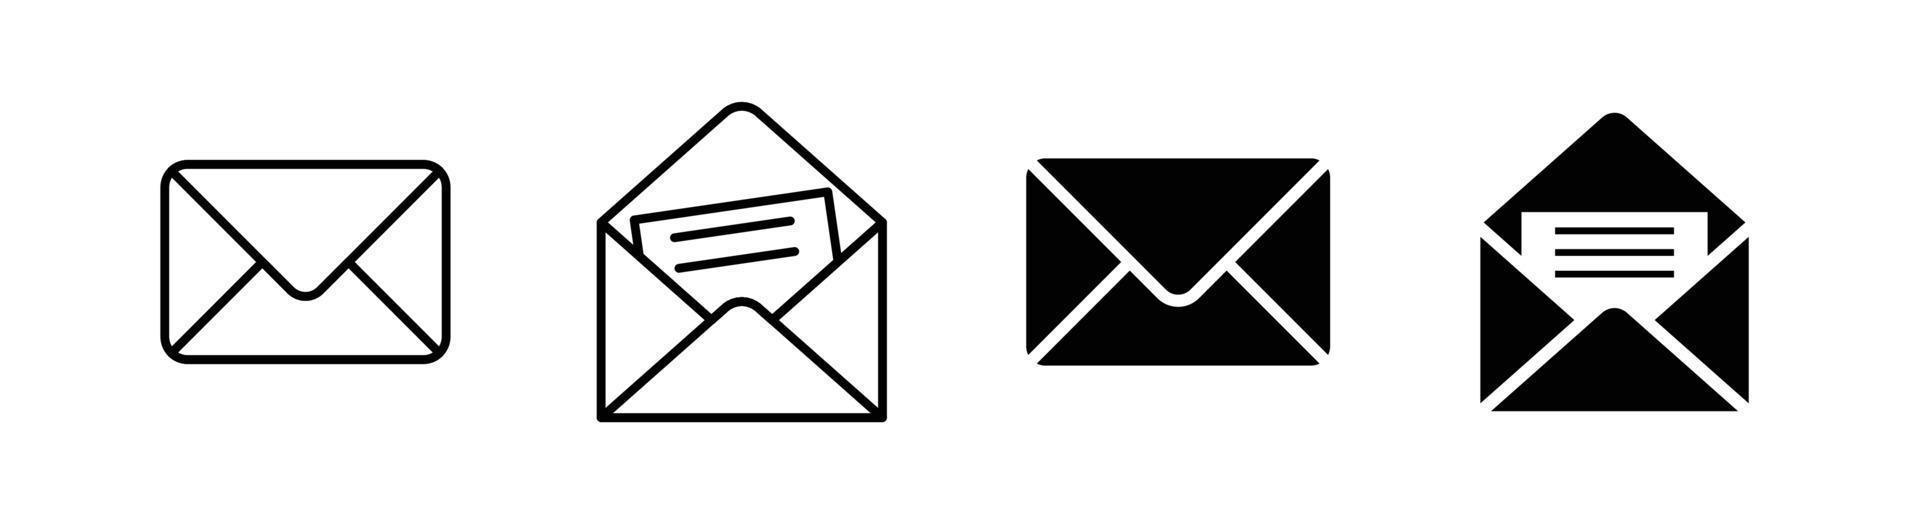 Envelope icon design element suitable for websites, print design or app vector